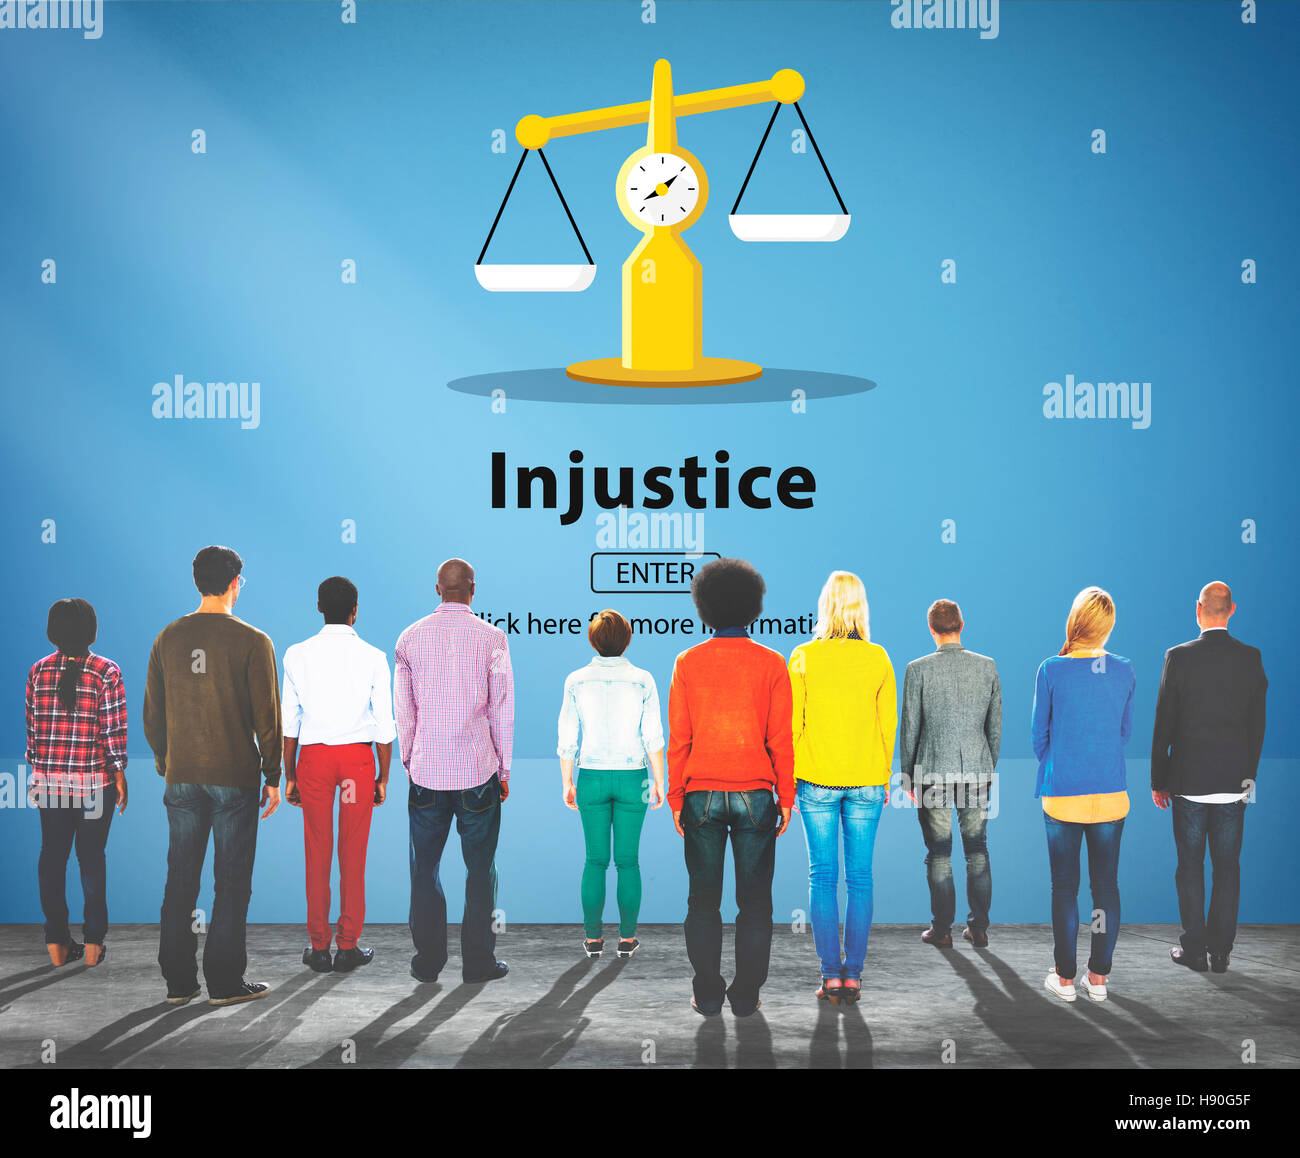 Injustice injustice rébellion Conflits Concept antagonisme Banque D'Images